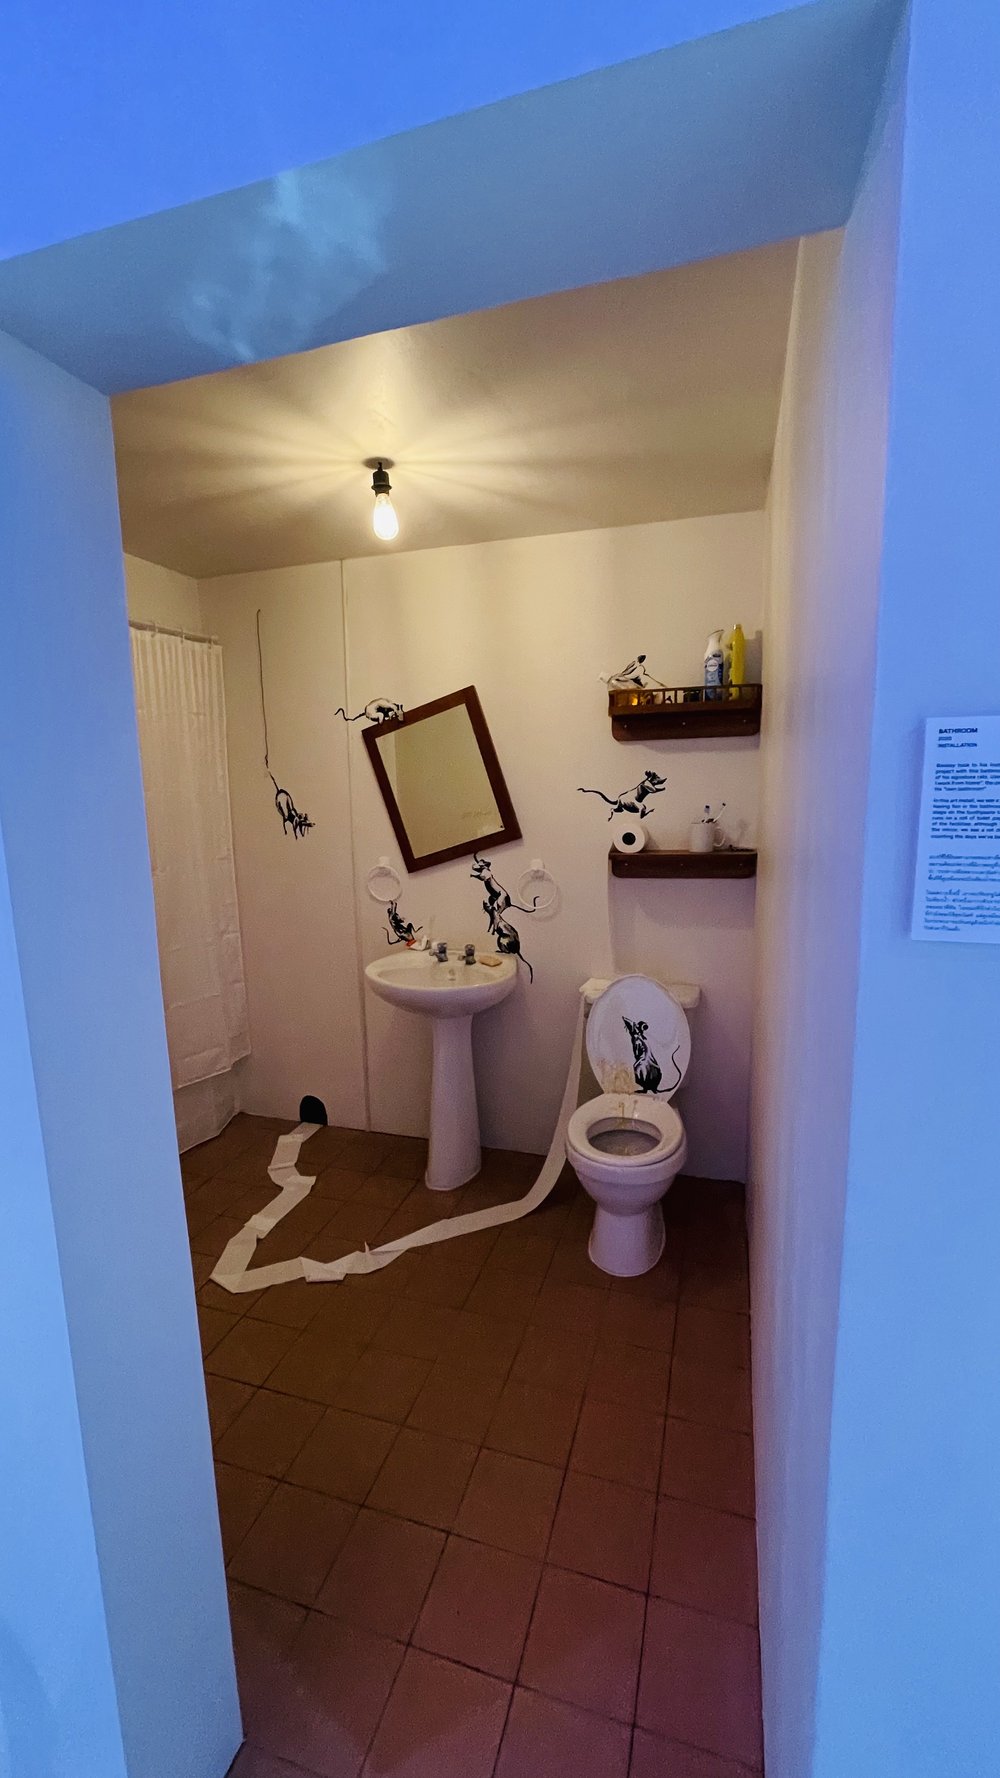 352 Bathroom, Bansky.jpeg